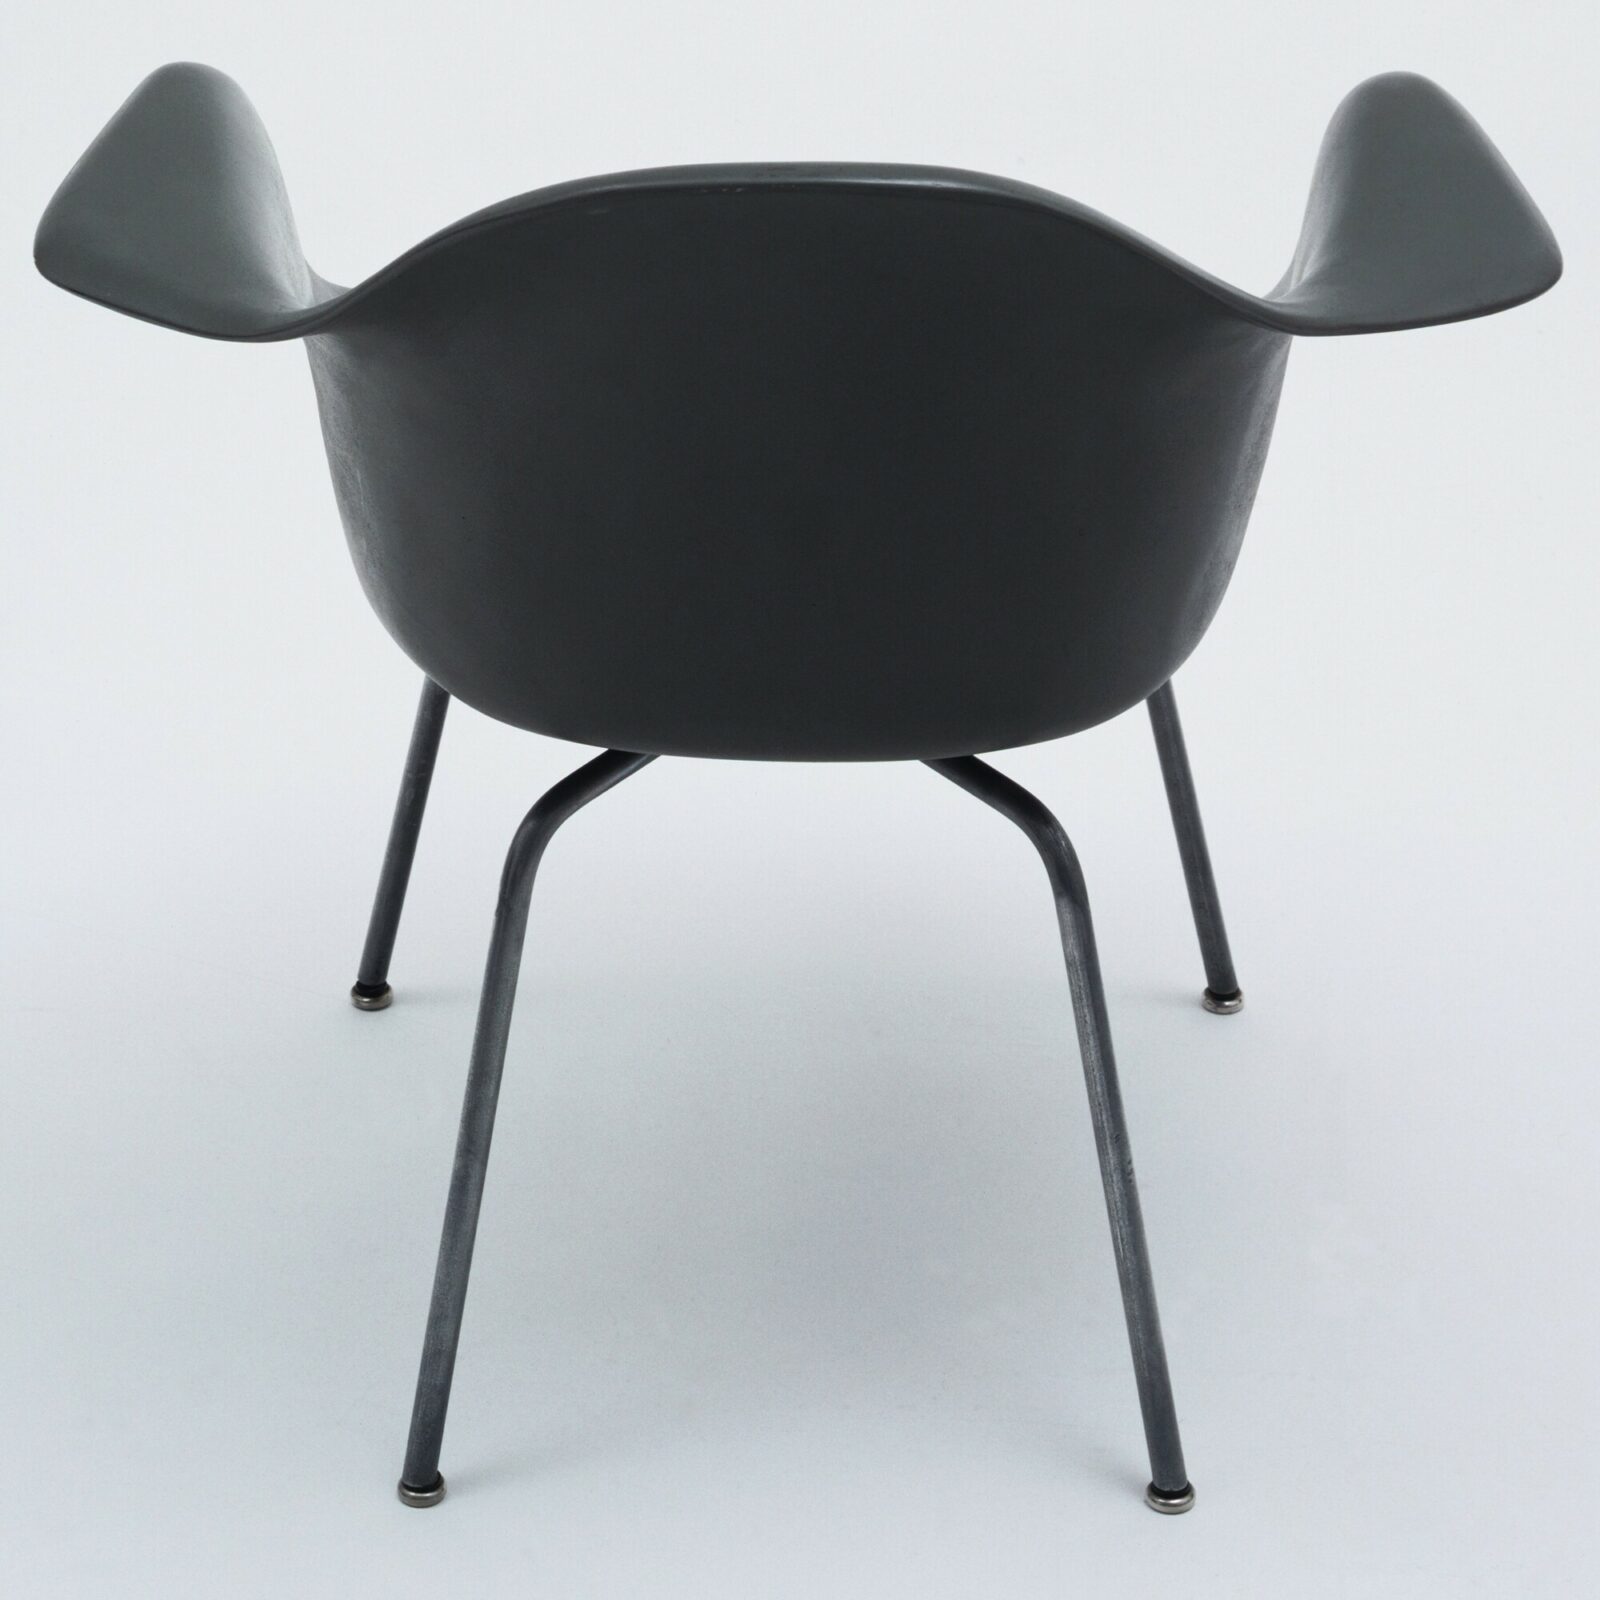 Plastic Chair Primer prototipo de mecedora 